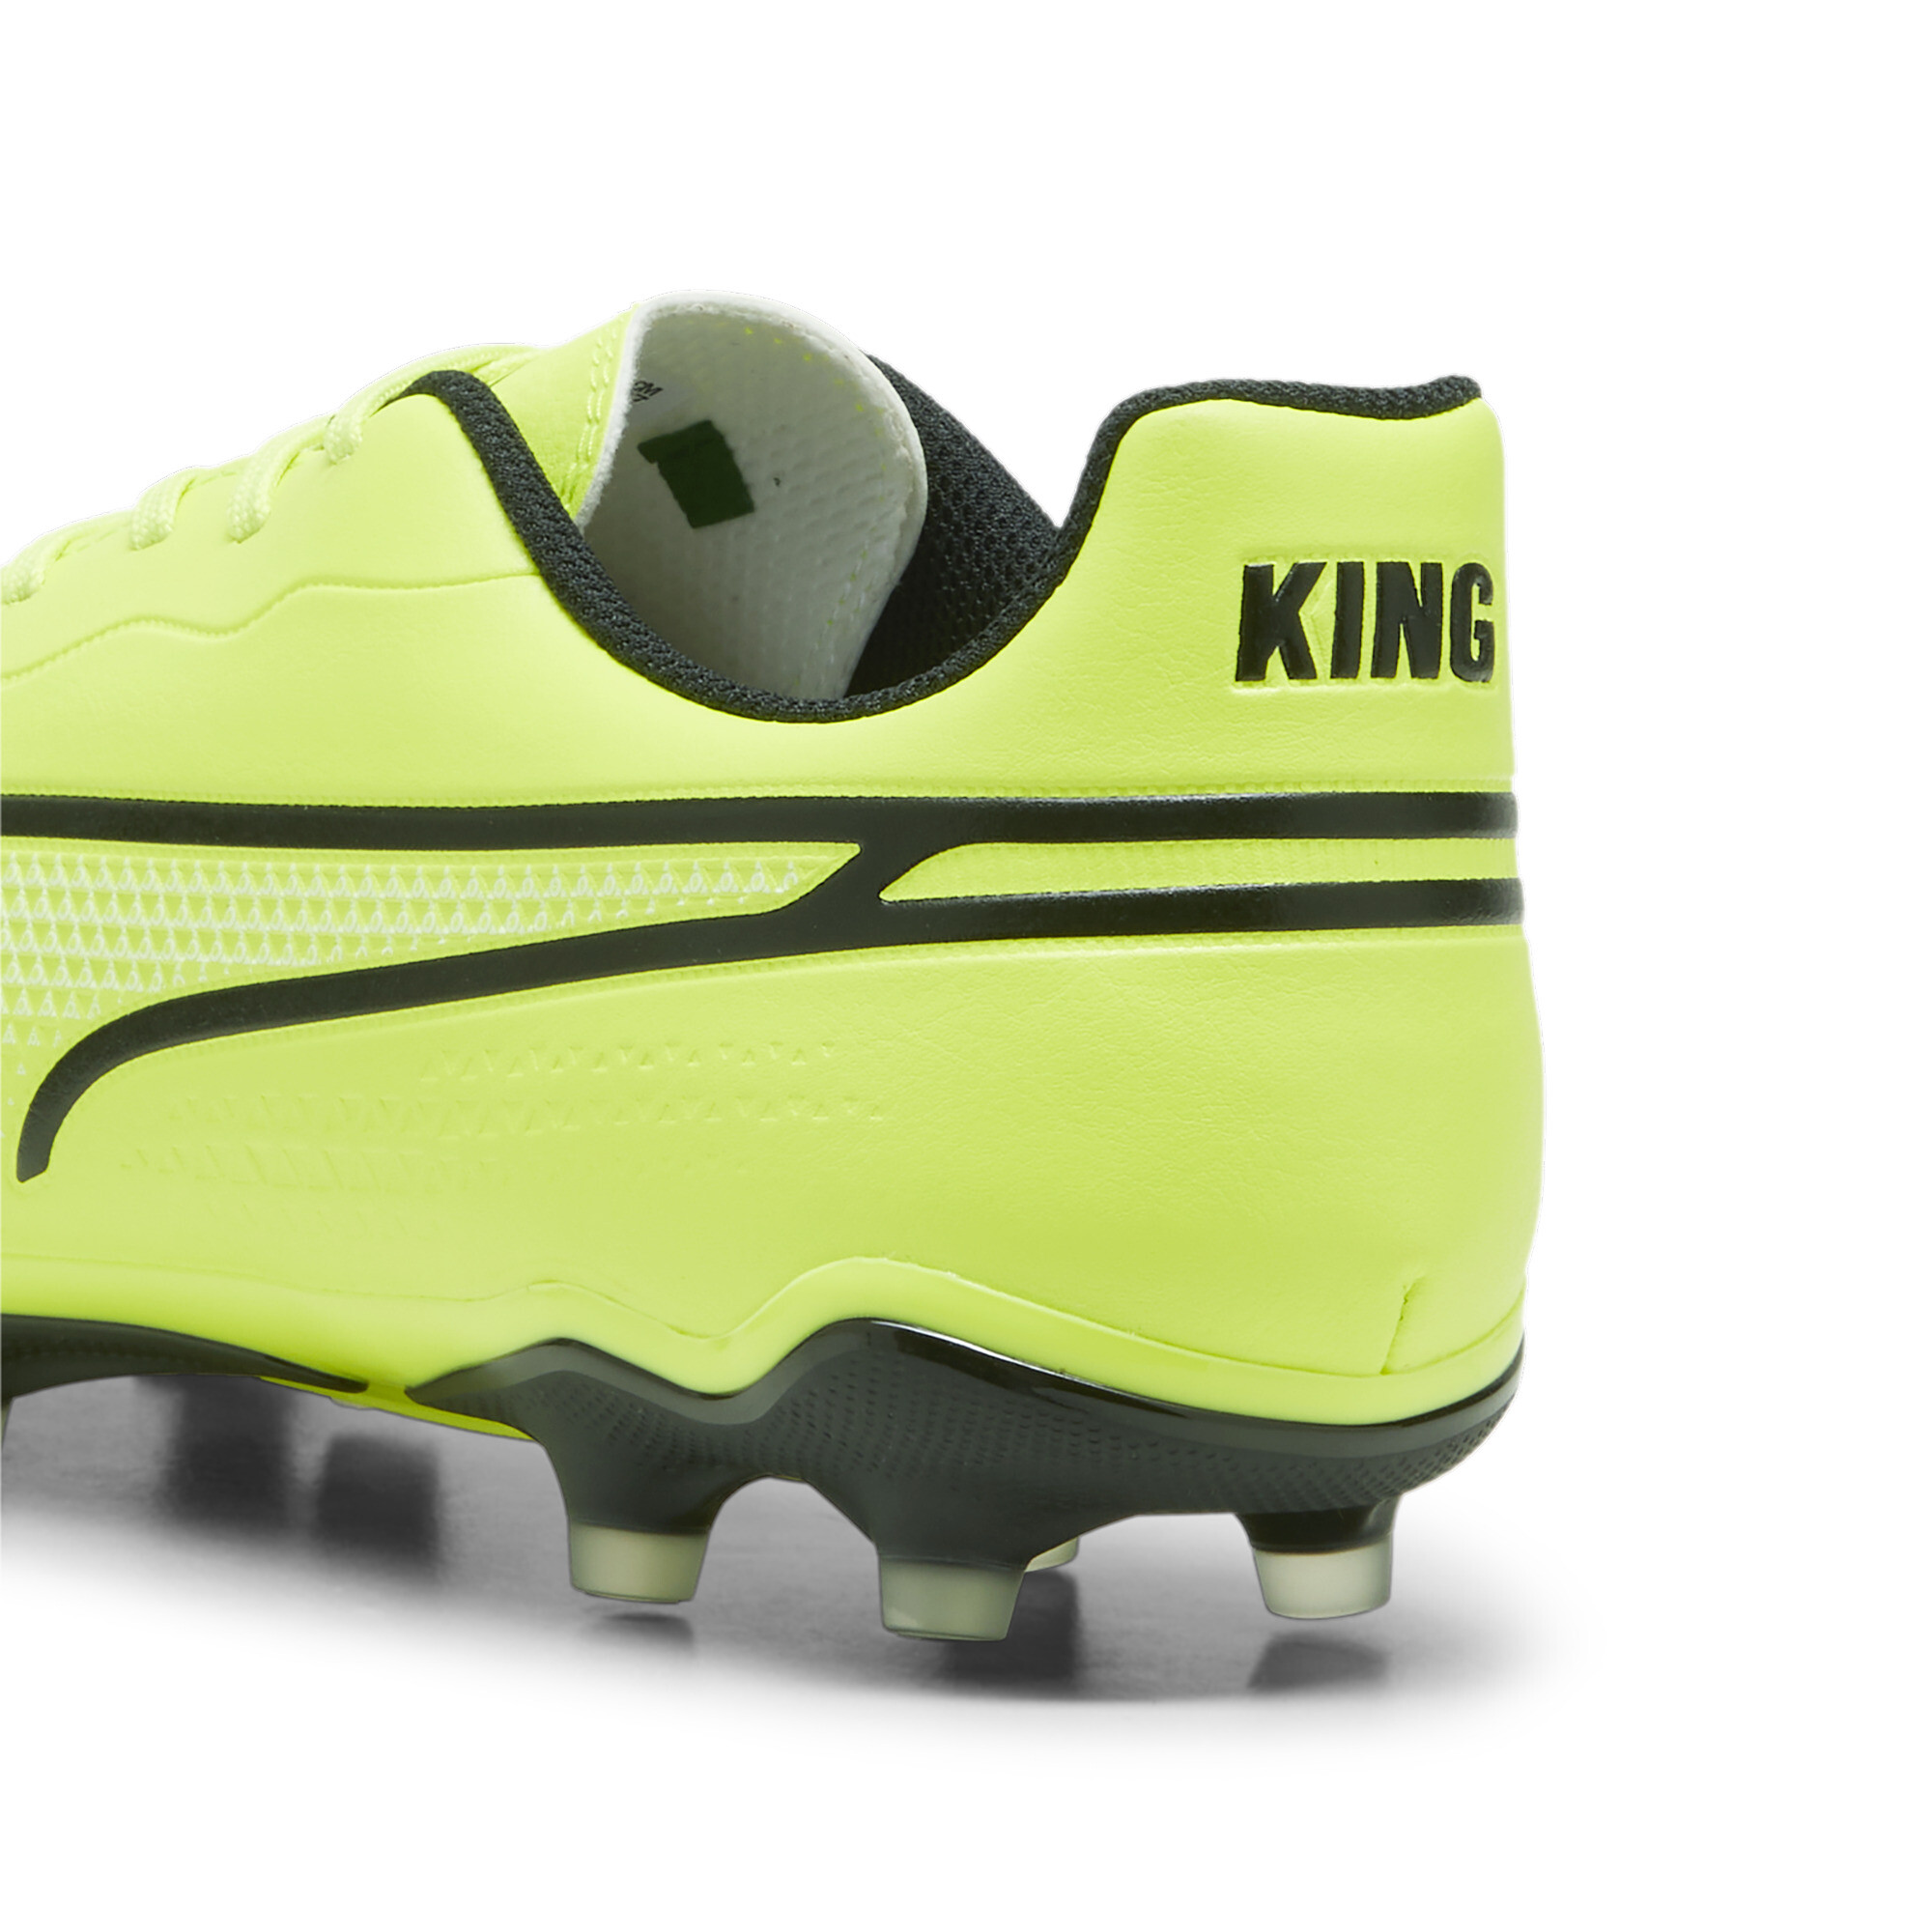 Men's PUMA KING MATCH FG/AG Football Boots In Green, Size EU 40